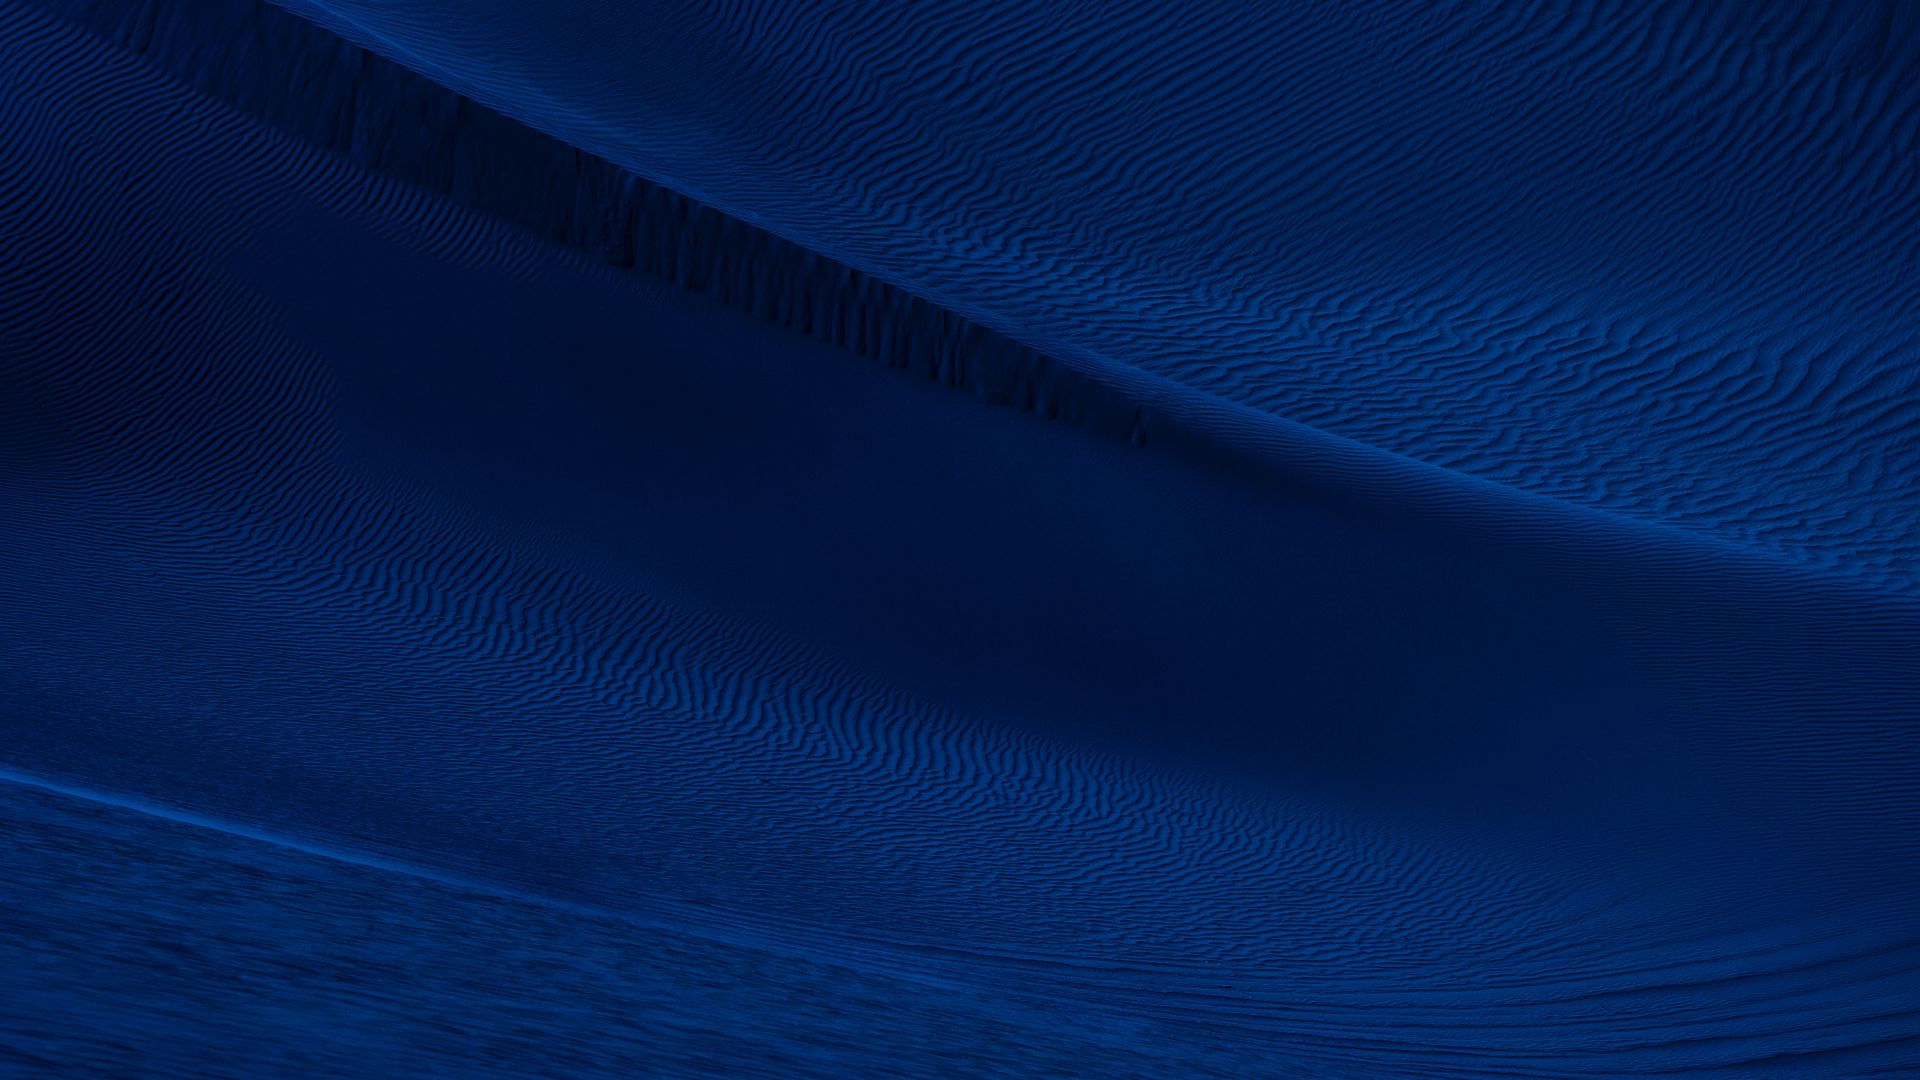 Download wallpaper 1920x1080 desert, sand, dunes, dark, blue full hd, hdtv, fhd, 1080p HD background